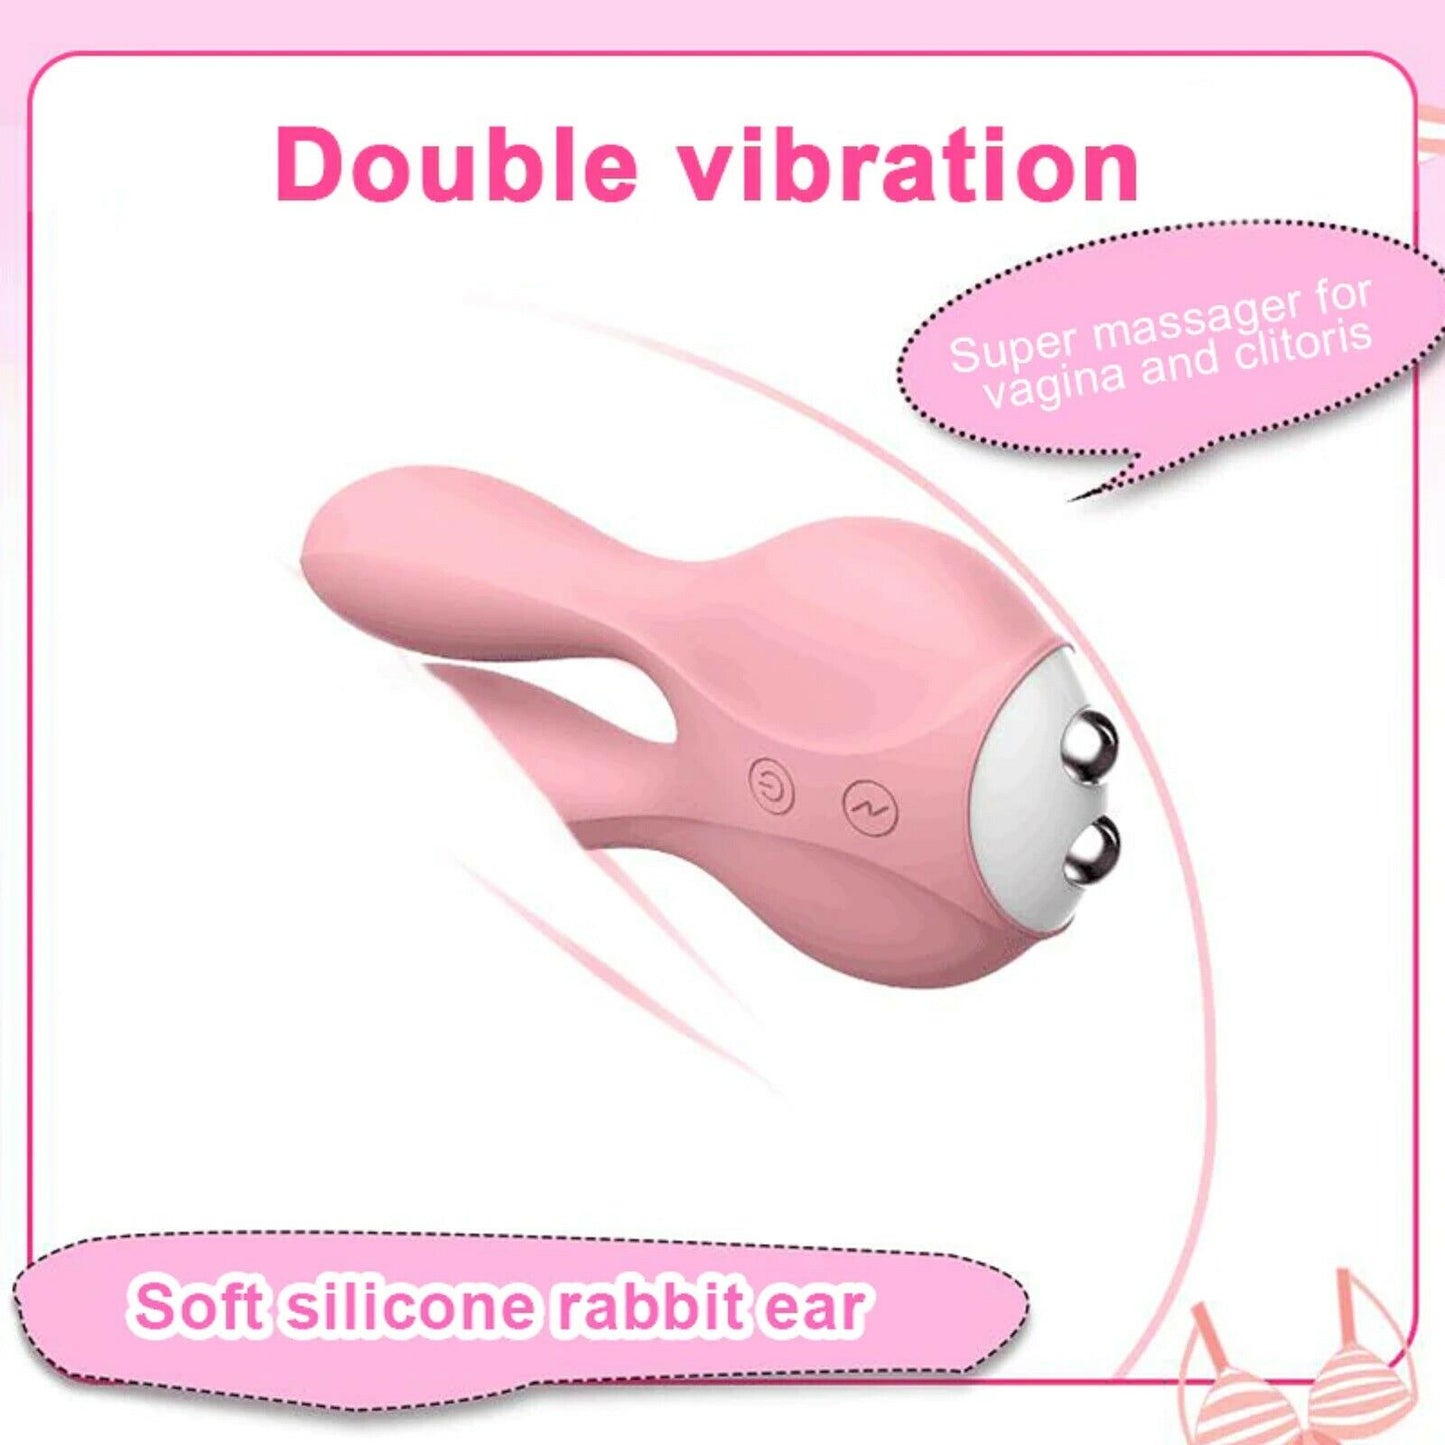 Electric Shock E-Stim Vibrator Rechargeable Electro Dildo Pulse Couples Sex Toy